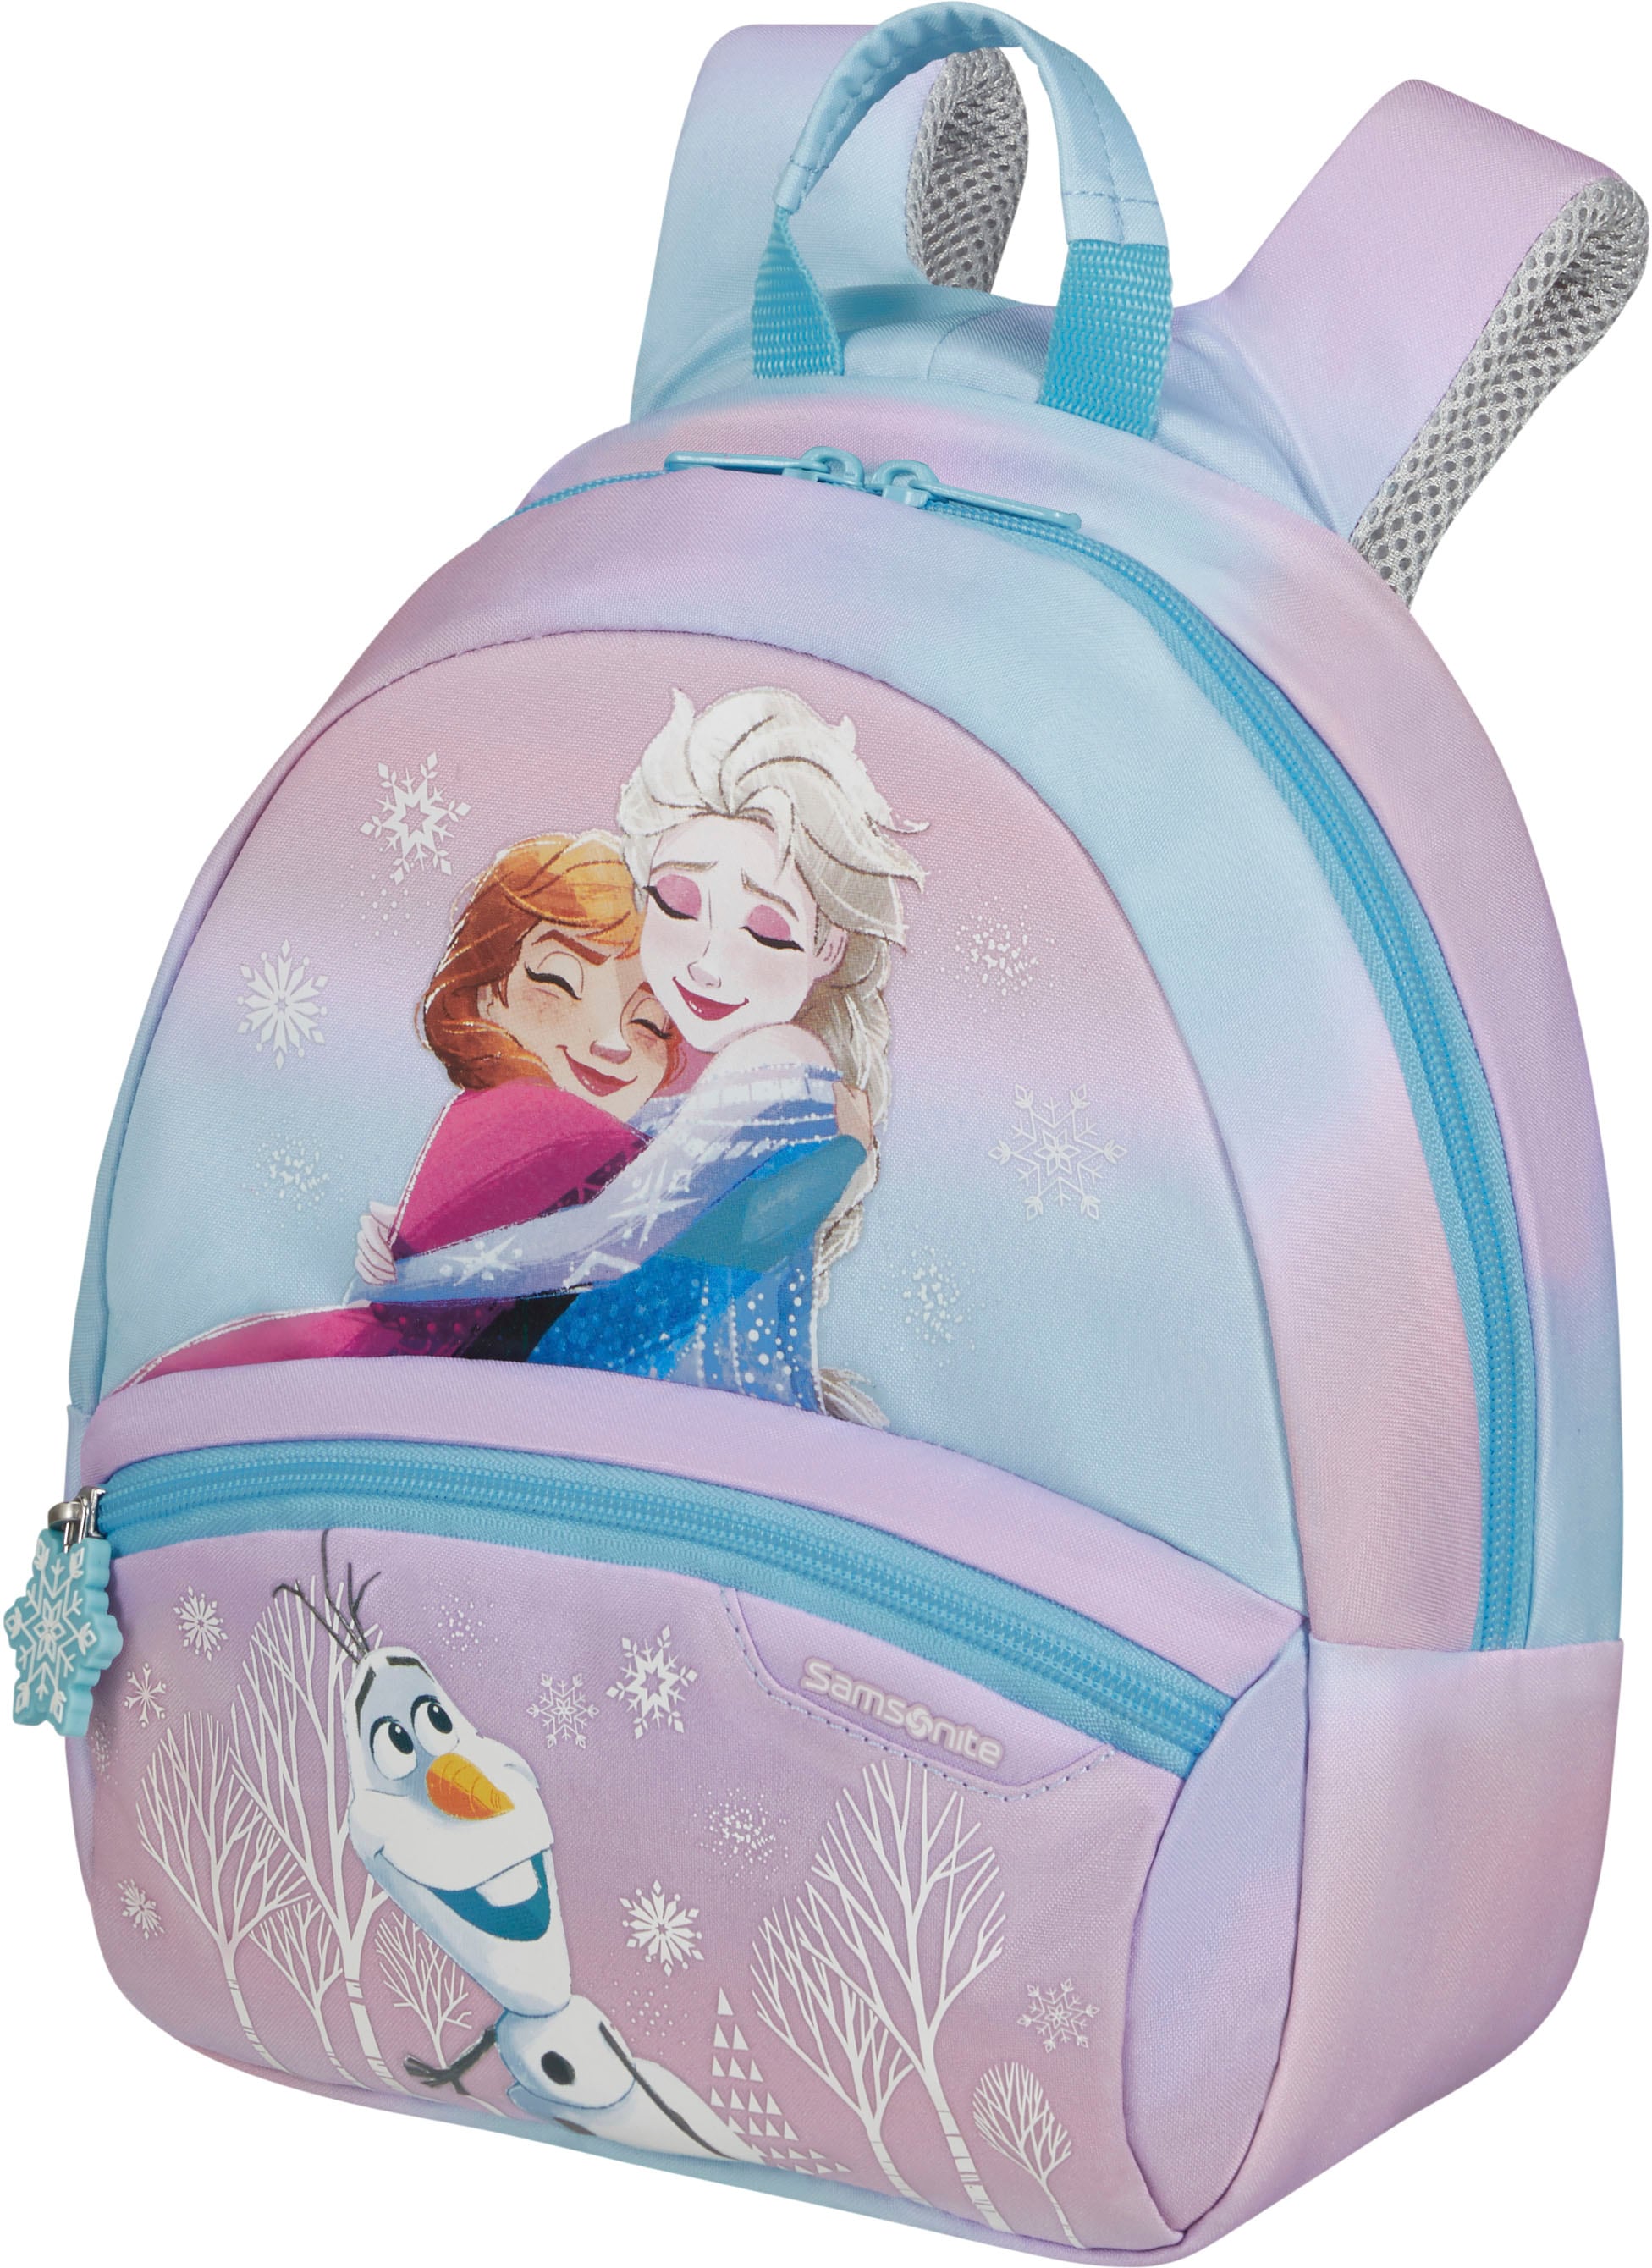 reflektierende Material enthält Ultimate bequem bestellen S, »Disney Samsonite Kinderrucksack Details, 2.0, Frozen«, recyceltes